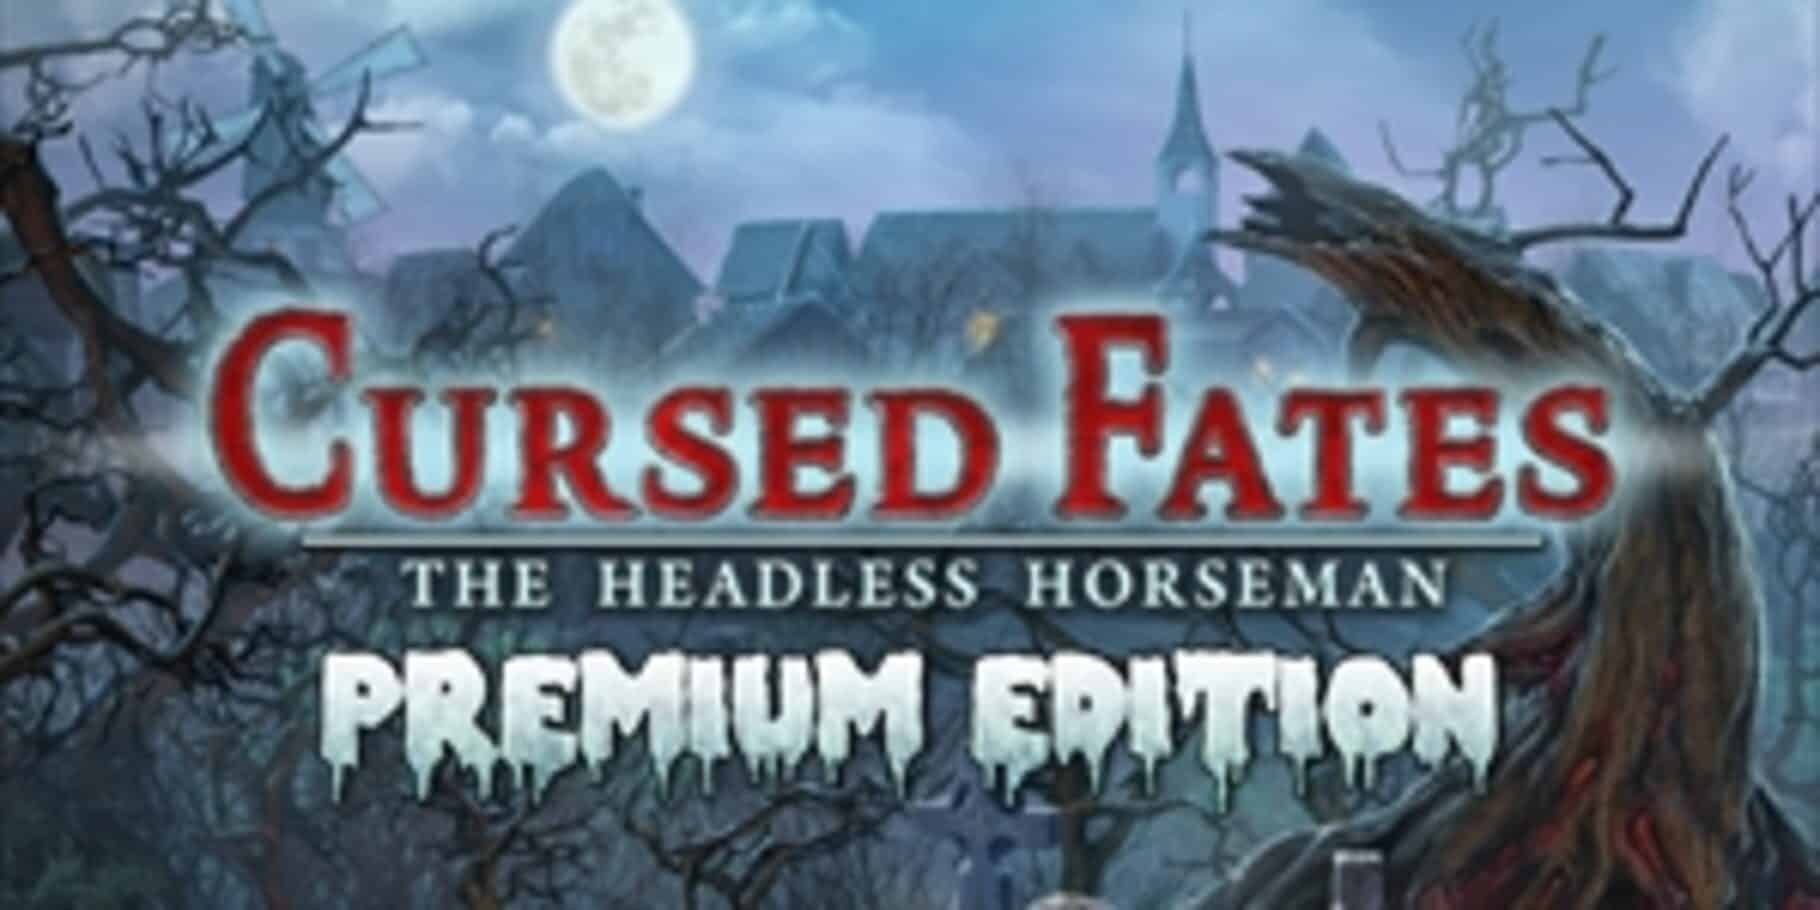 Cursed Fates: The Headless Horseman